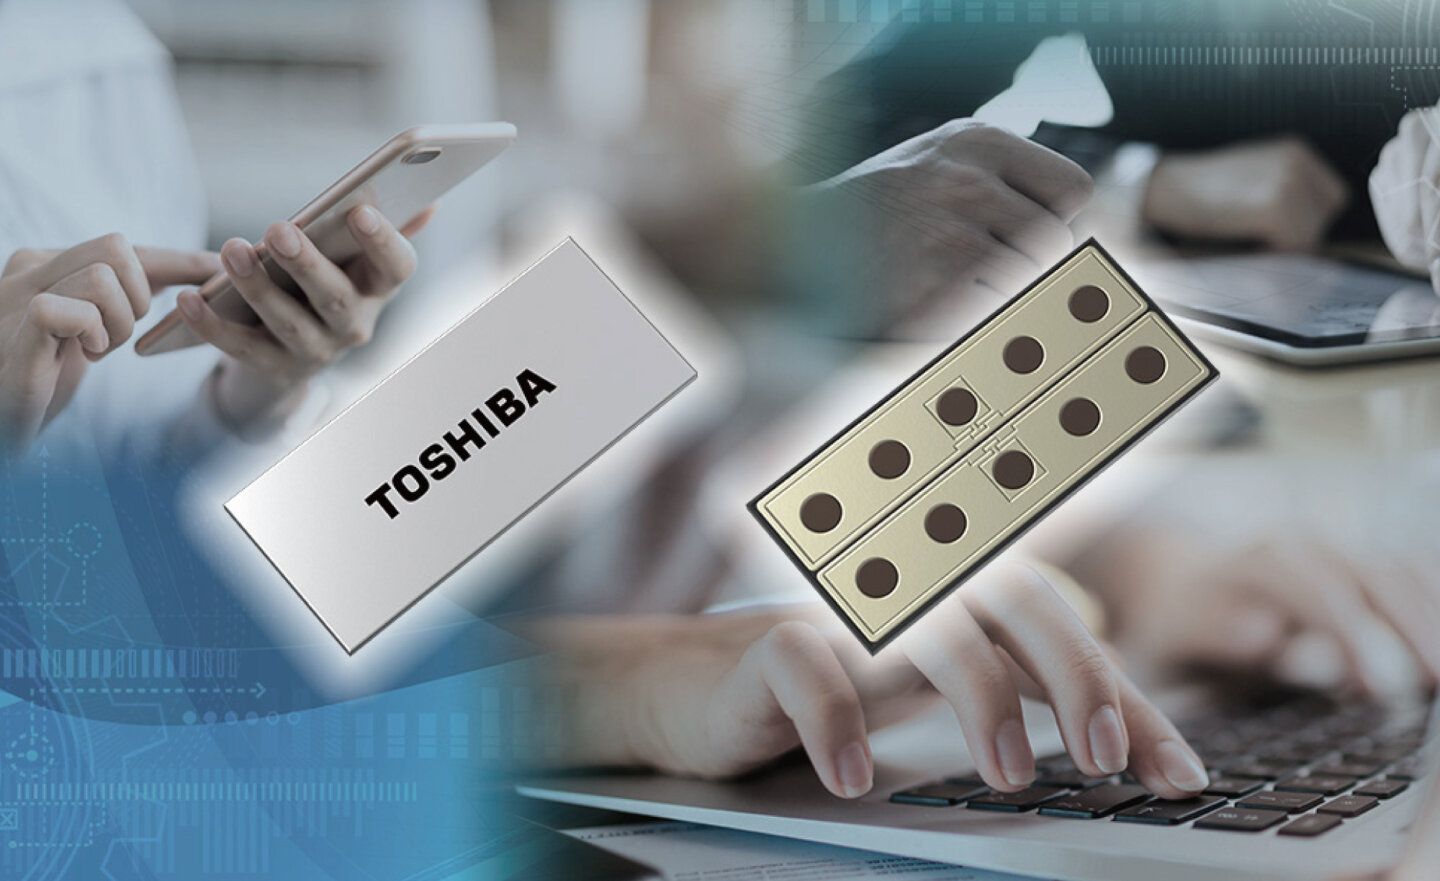 Toshiba 為 USB 裝置和電池組保護開發 30V N 溝道共漏 MOSFET